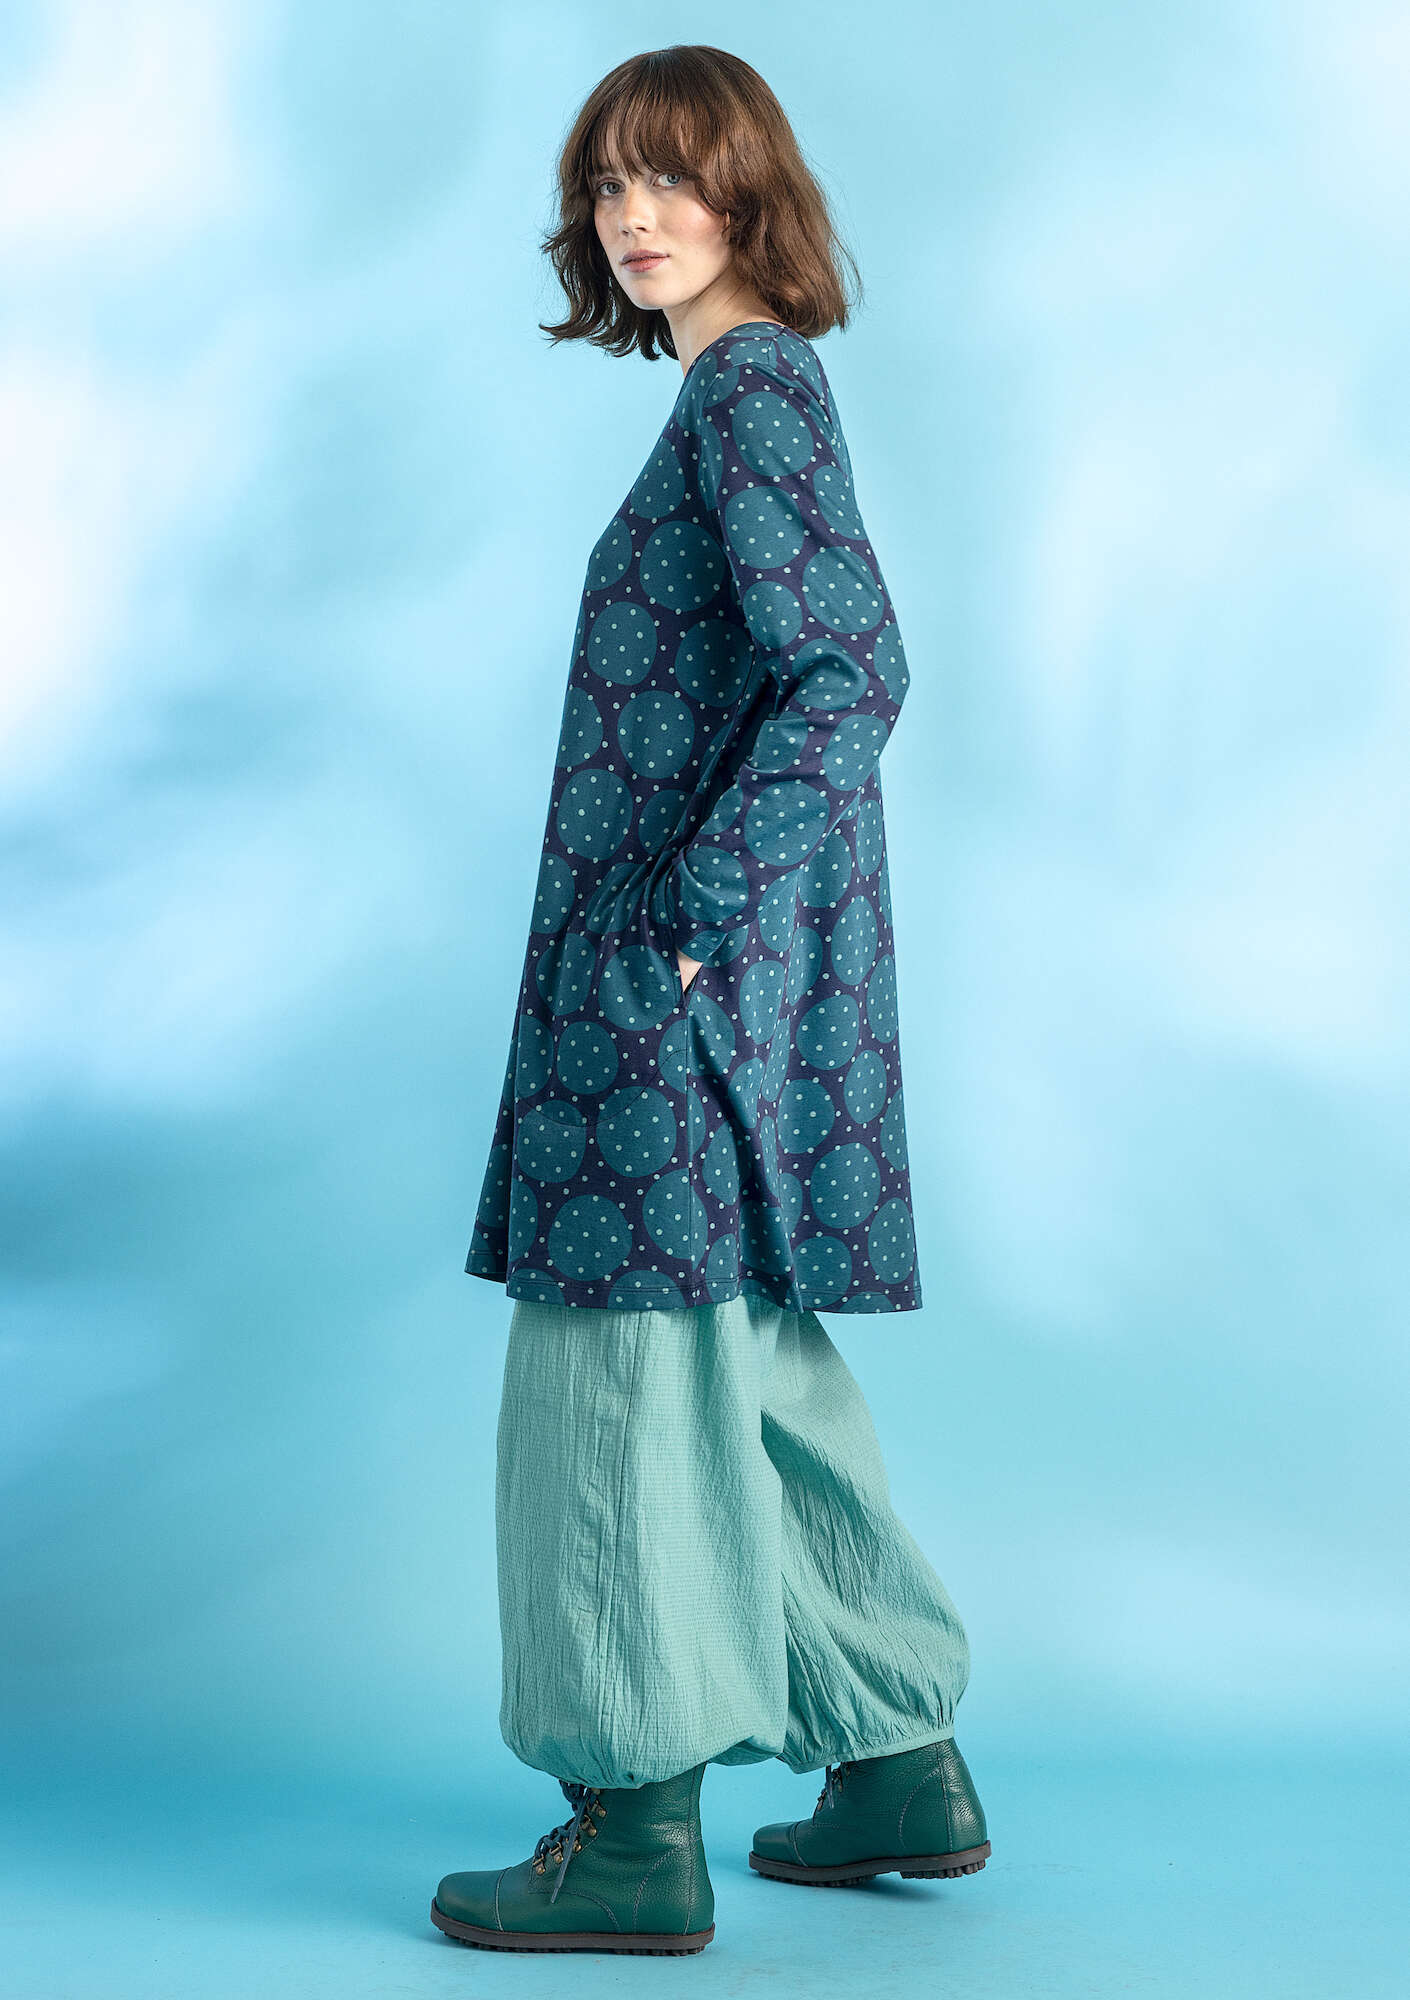 Oriana jersey tunic dark indigo/patterned